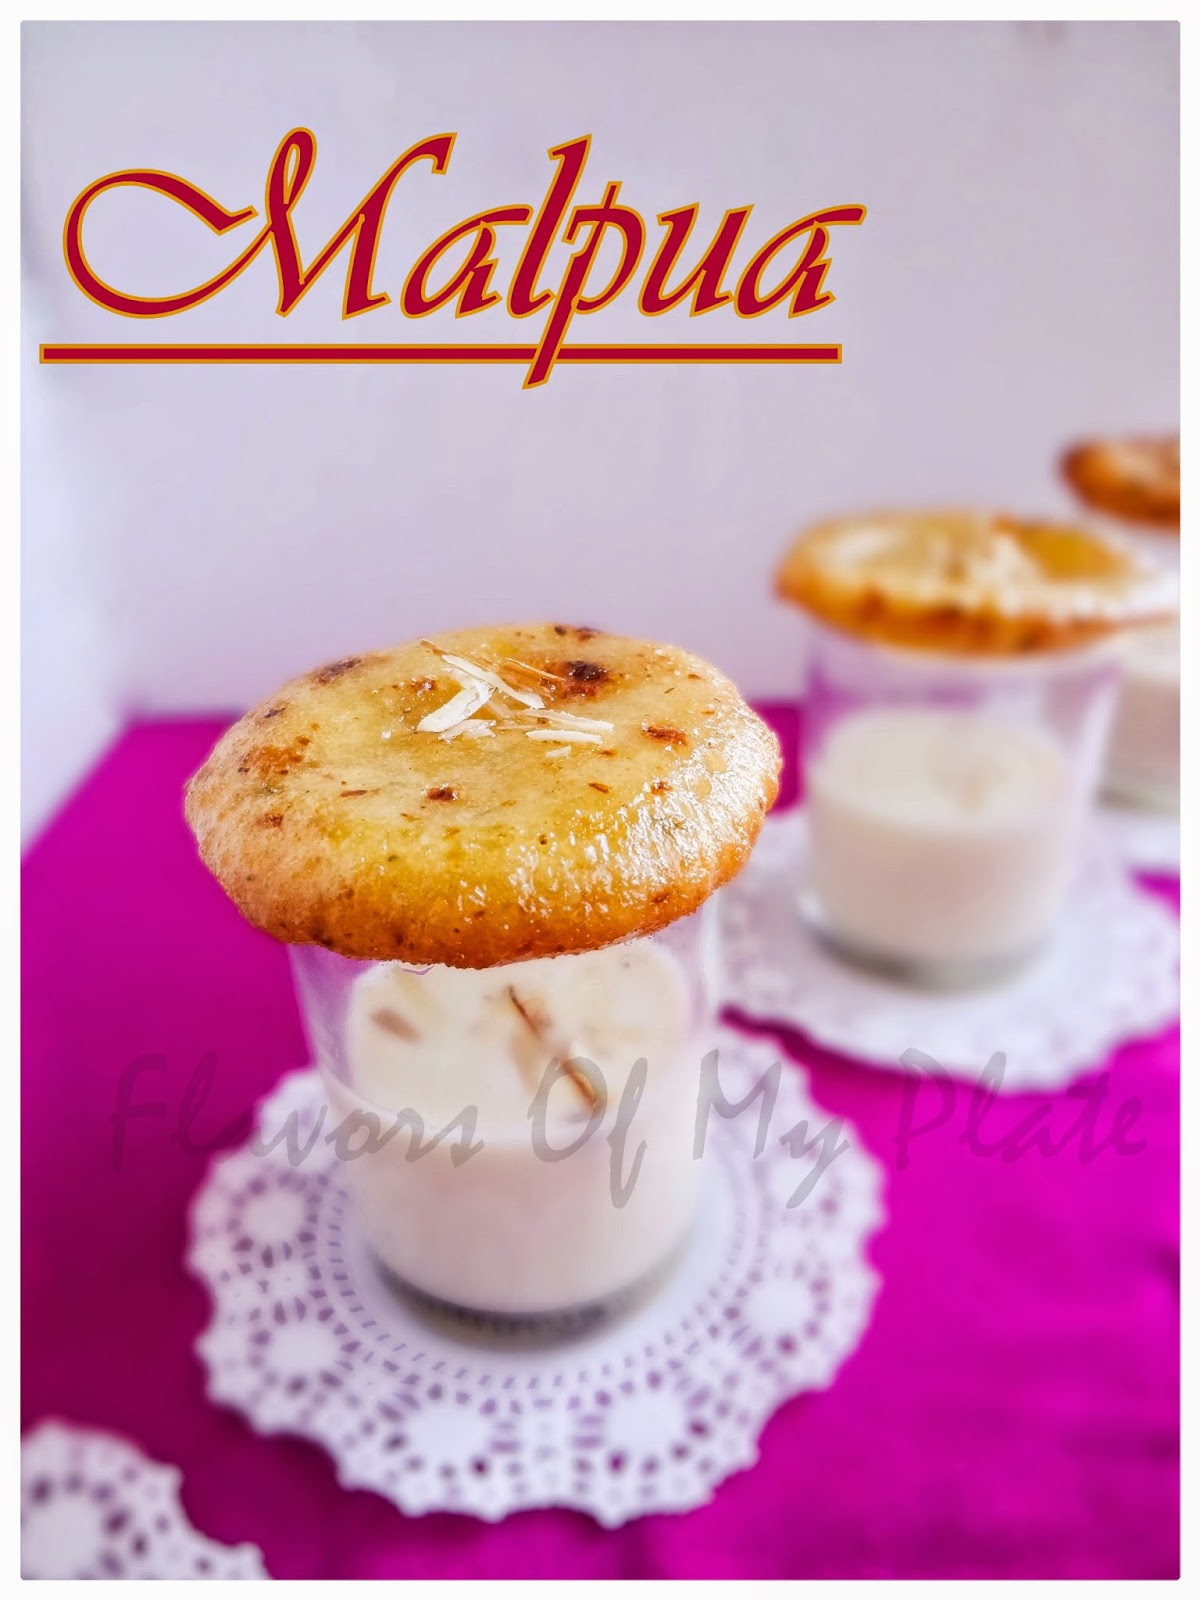 Flavors Of My Plate: Malpua....Sweet Indian Pancakes